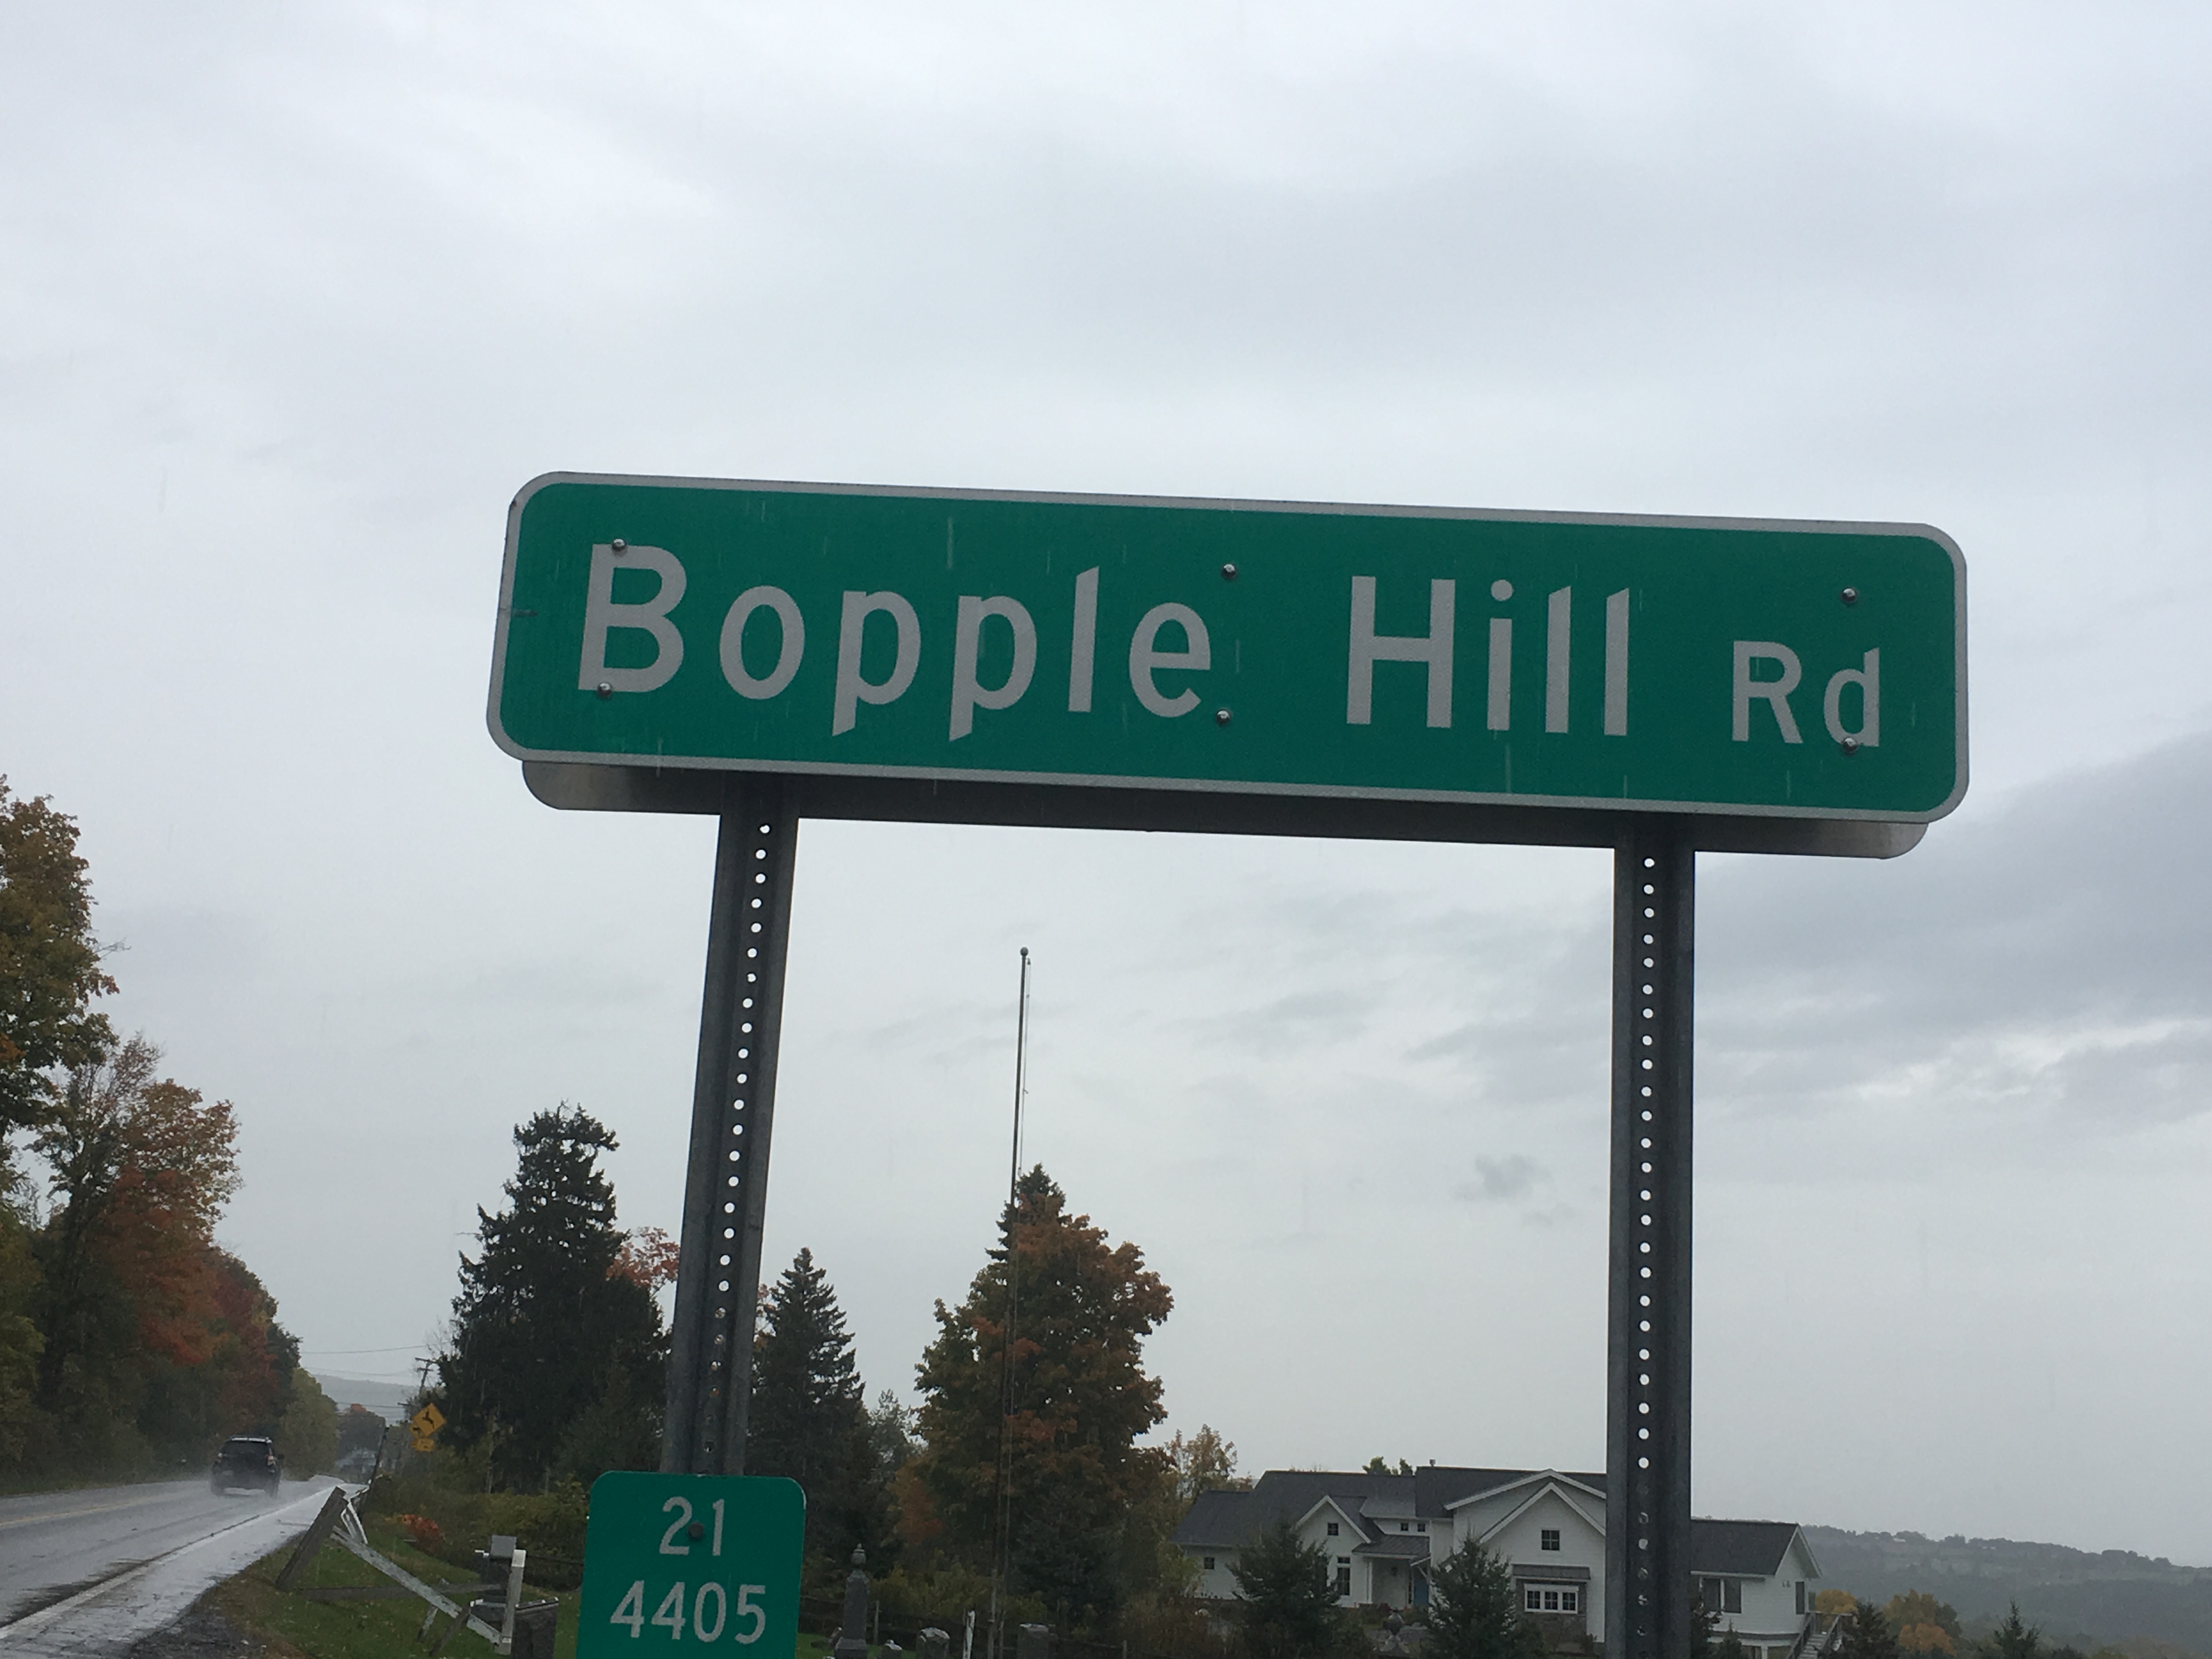 Bopple Hill